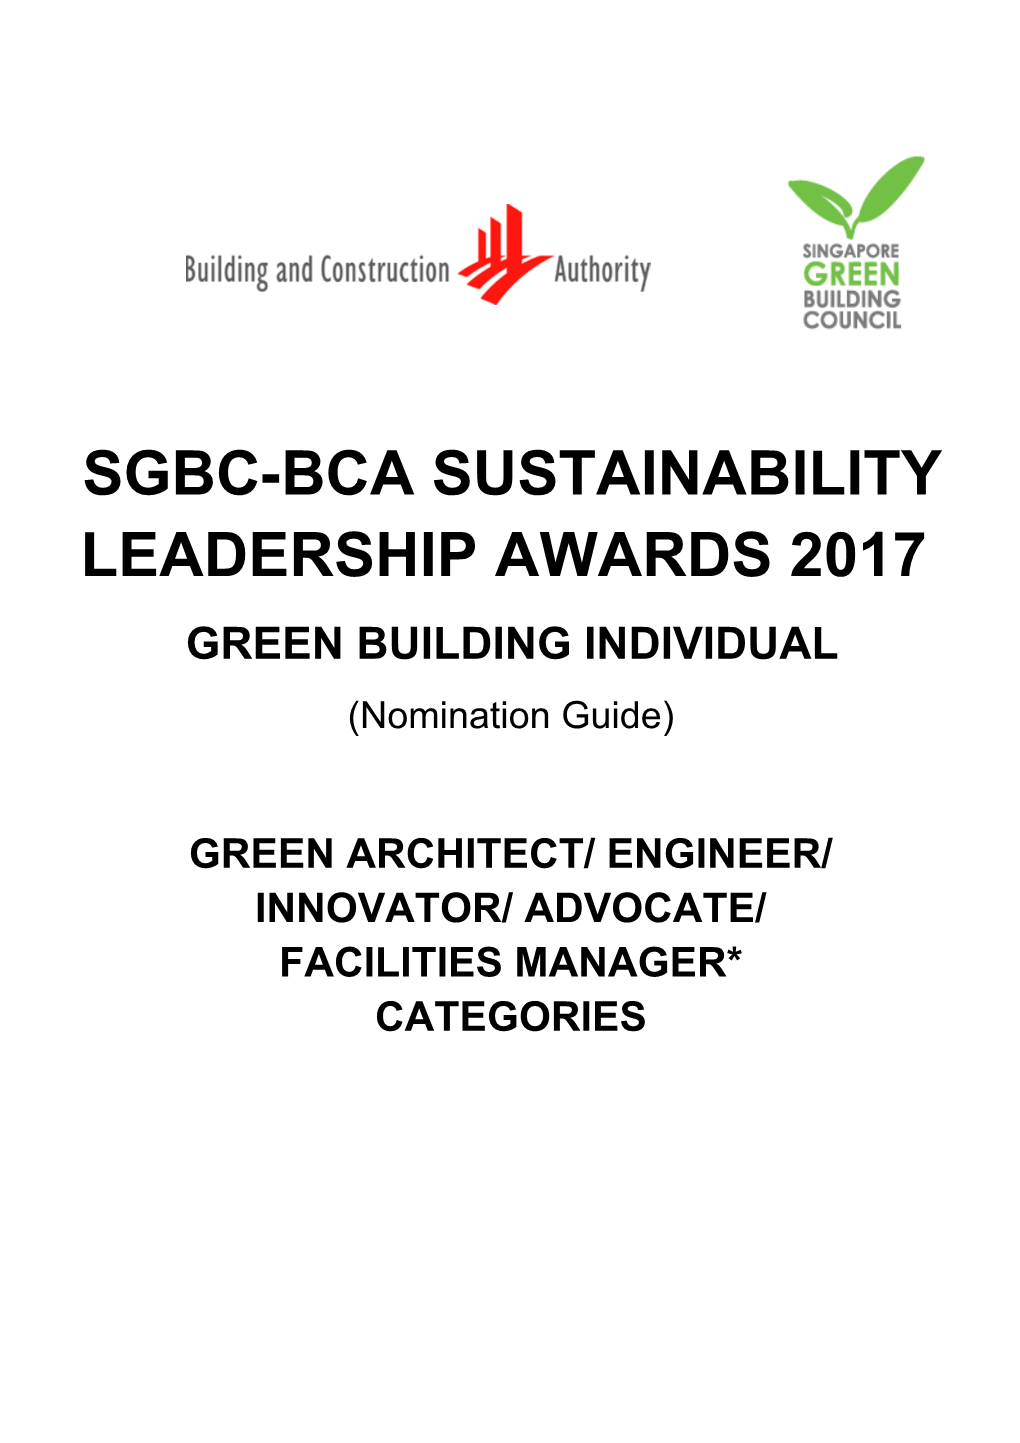 SGBC-BCA Sustainability Leadership Awards 2017